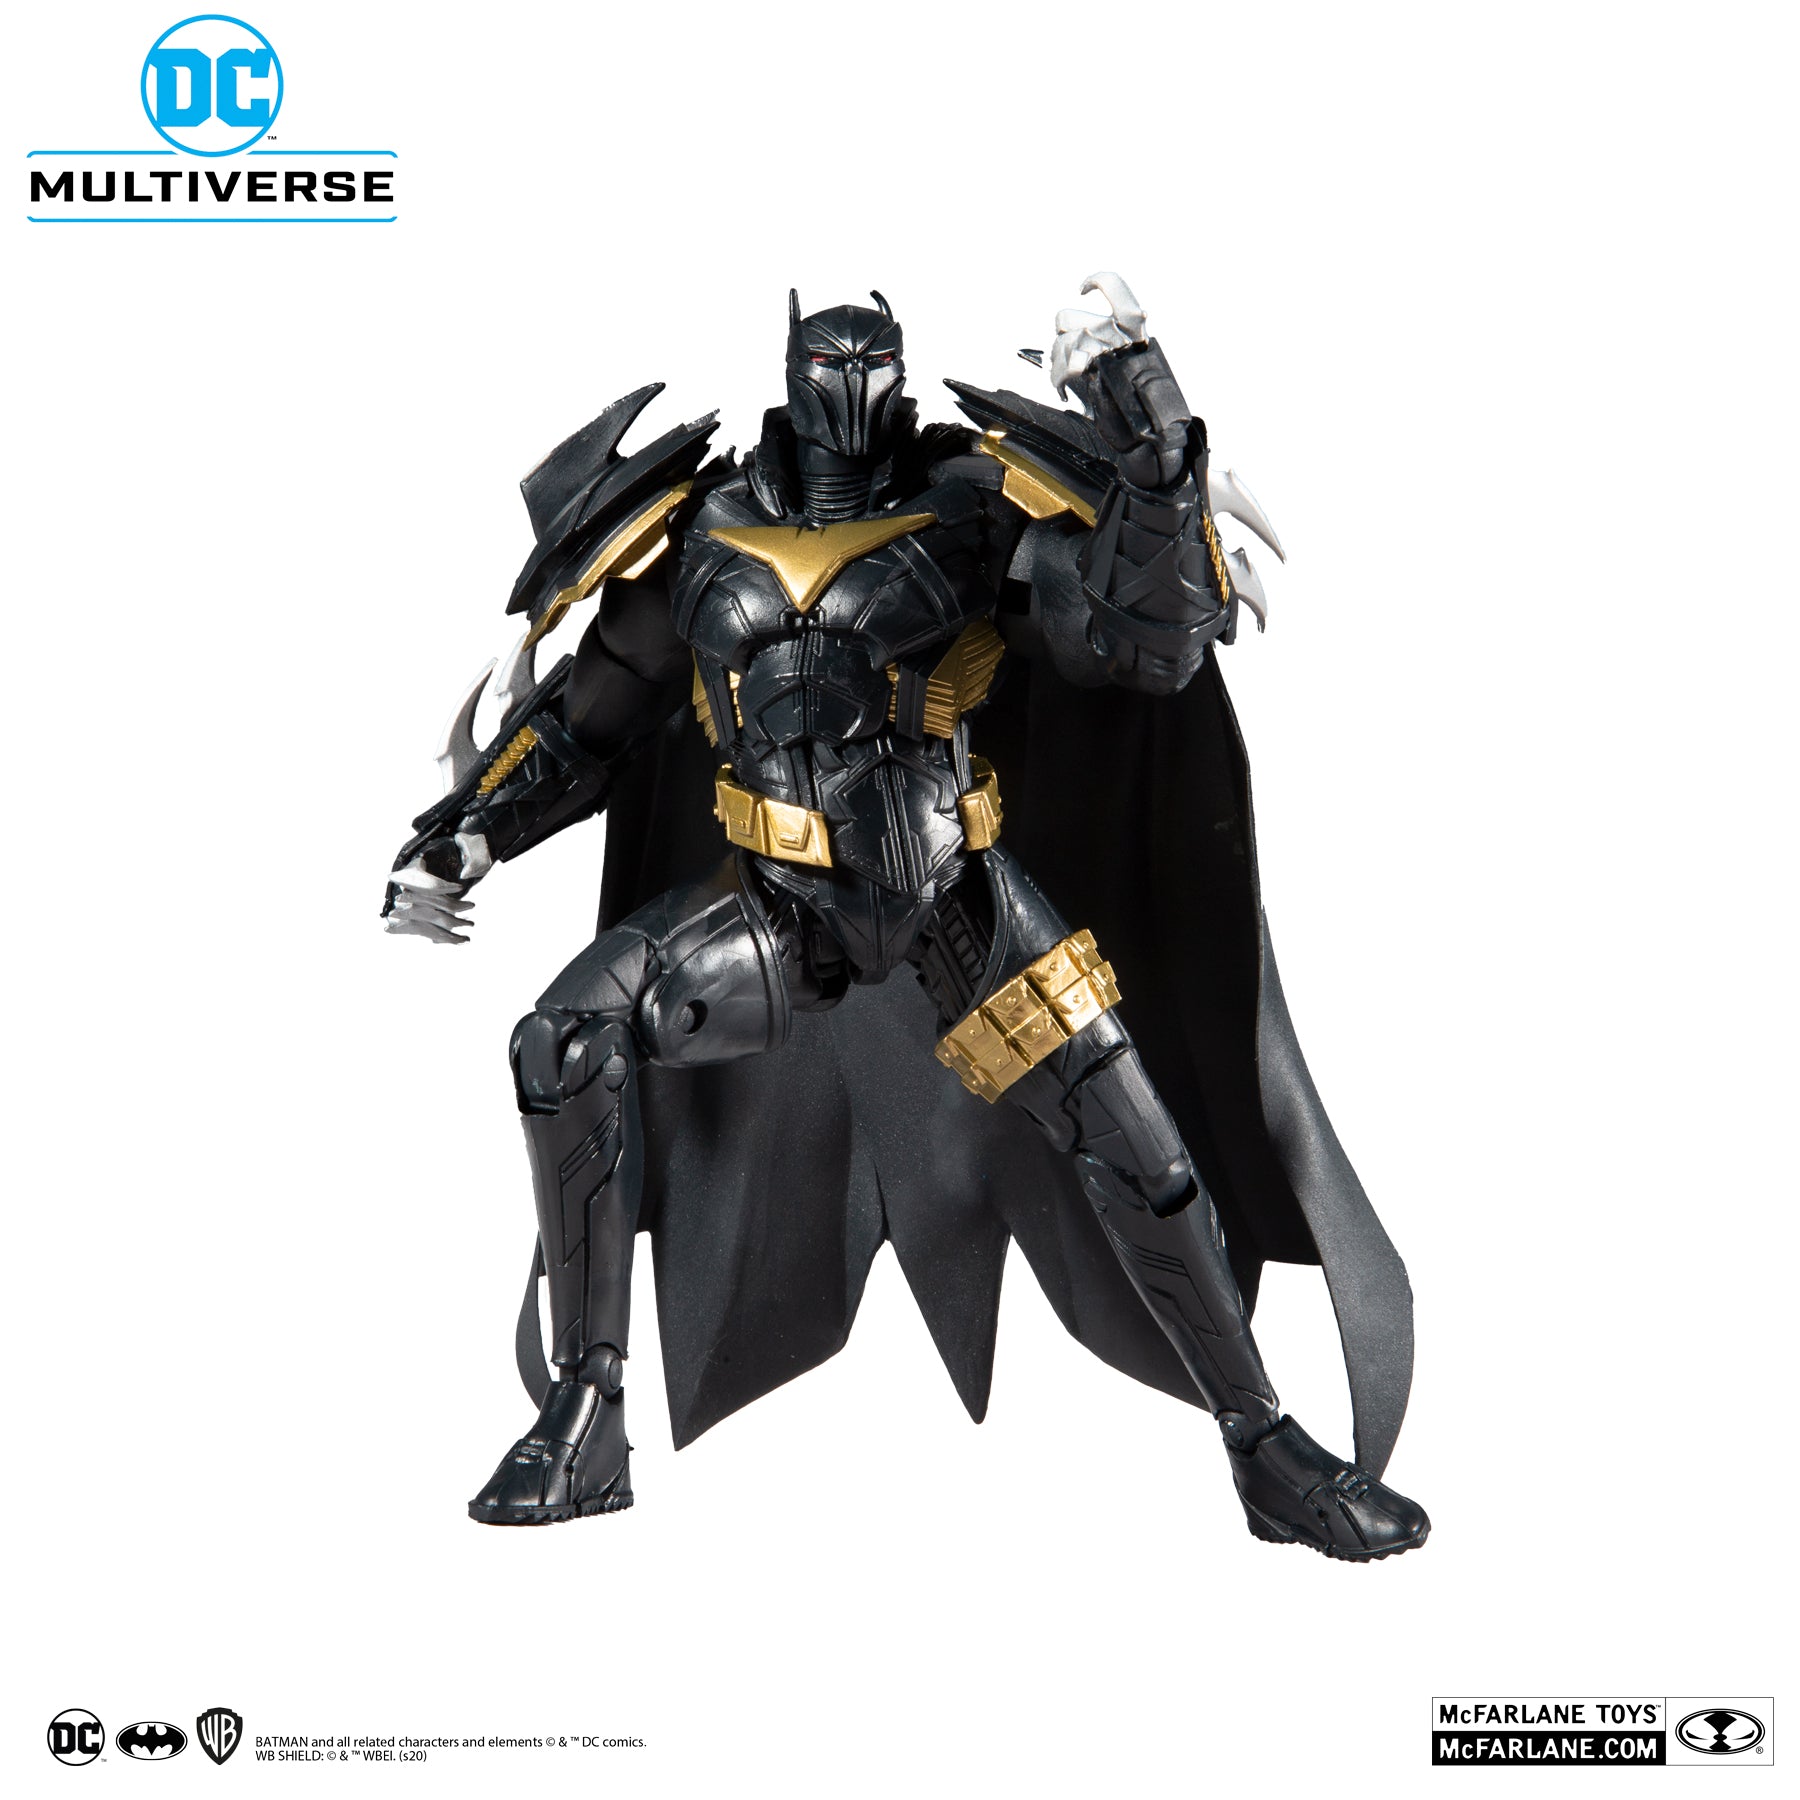 DC Multiverse White Knight Azrael Batman Armor - Azbat - McFarlane Toys